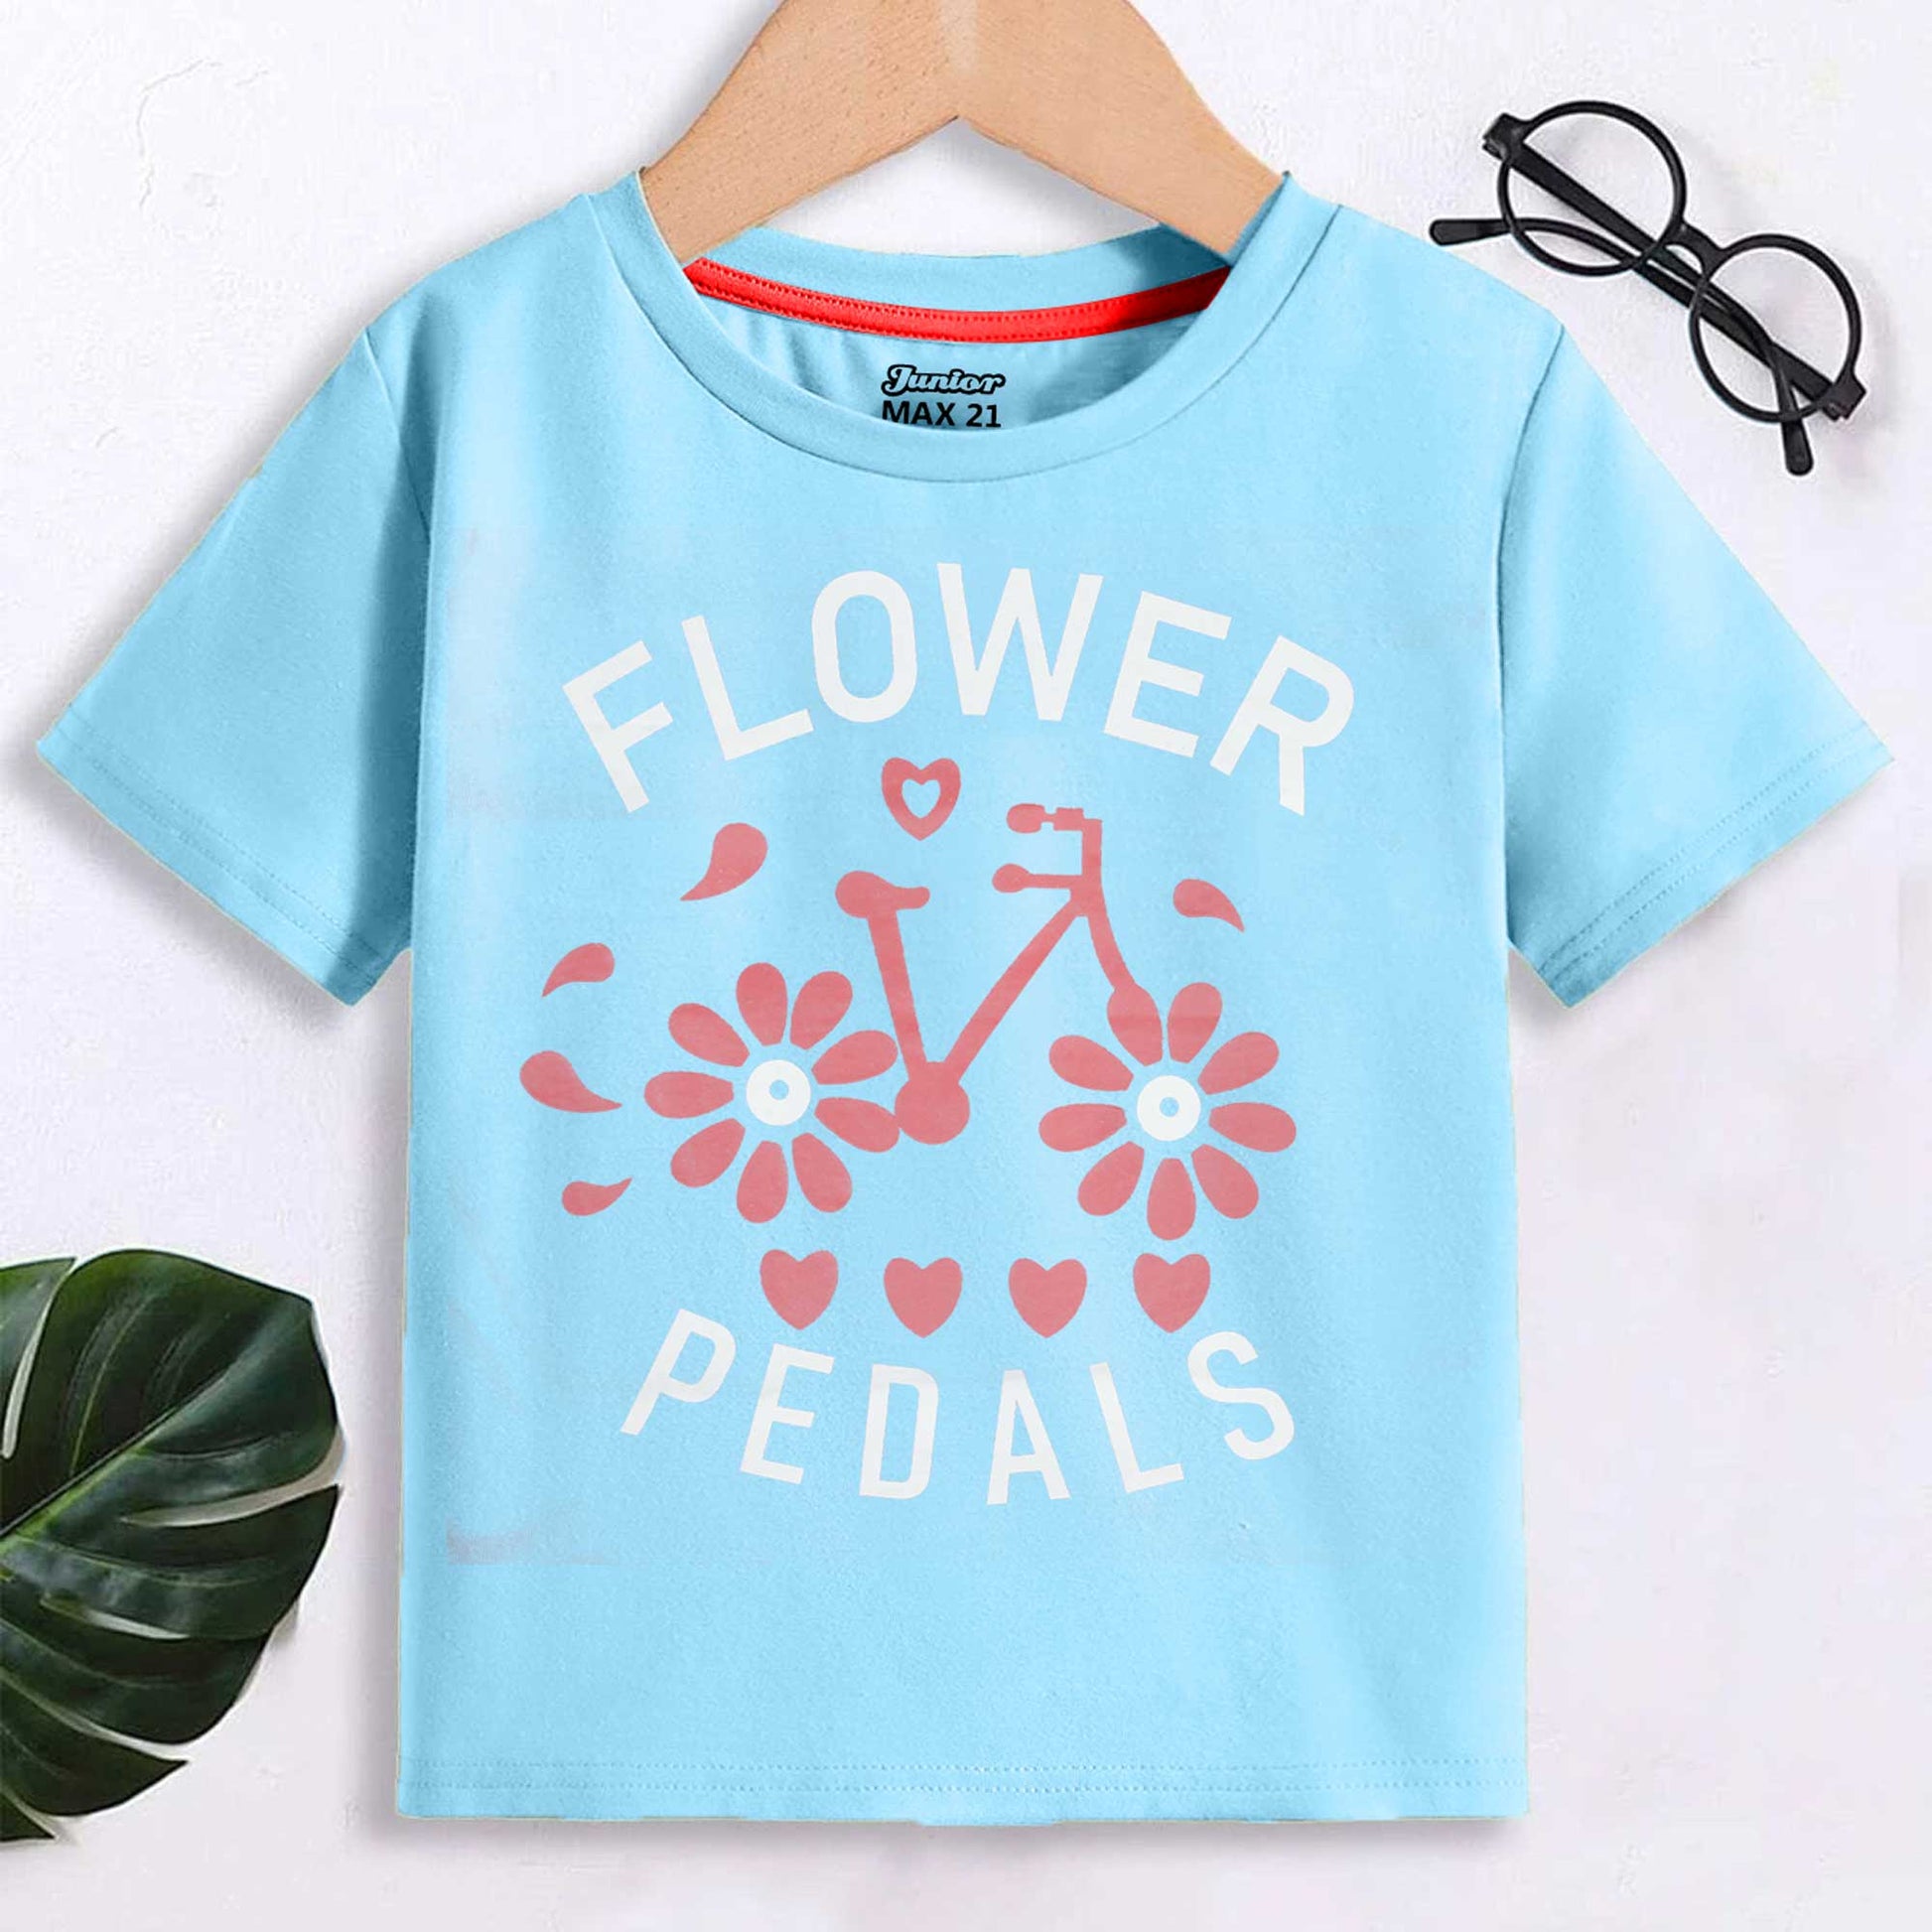 Junior Max 21 Kid's Flower Printed Tee Shirt Girl's Tee Shirt SZK Sky 3-6 Months 